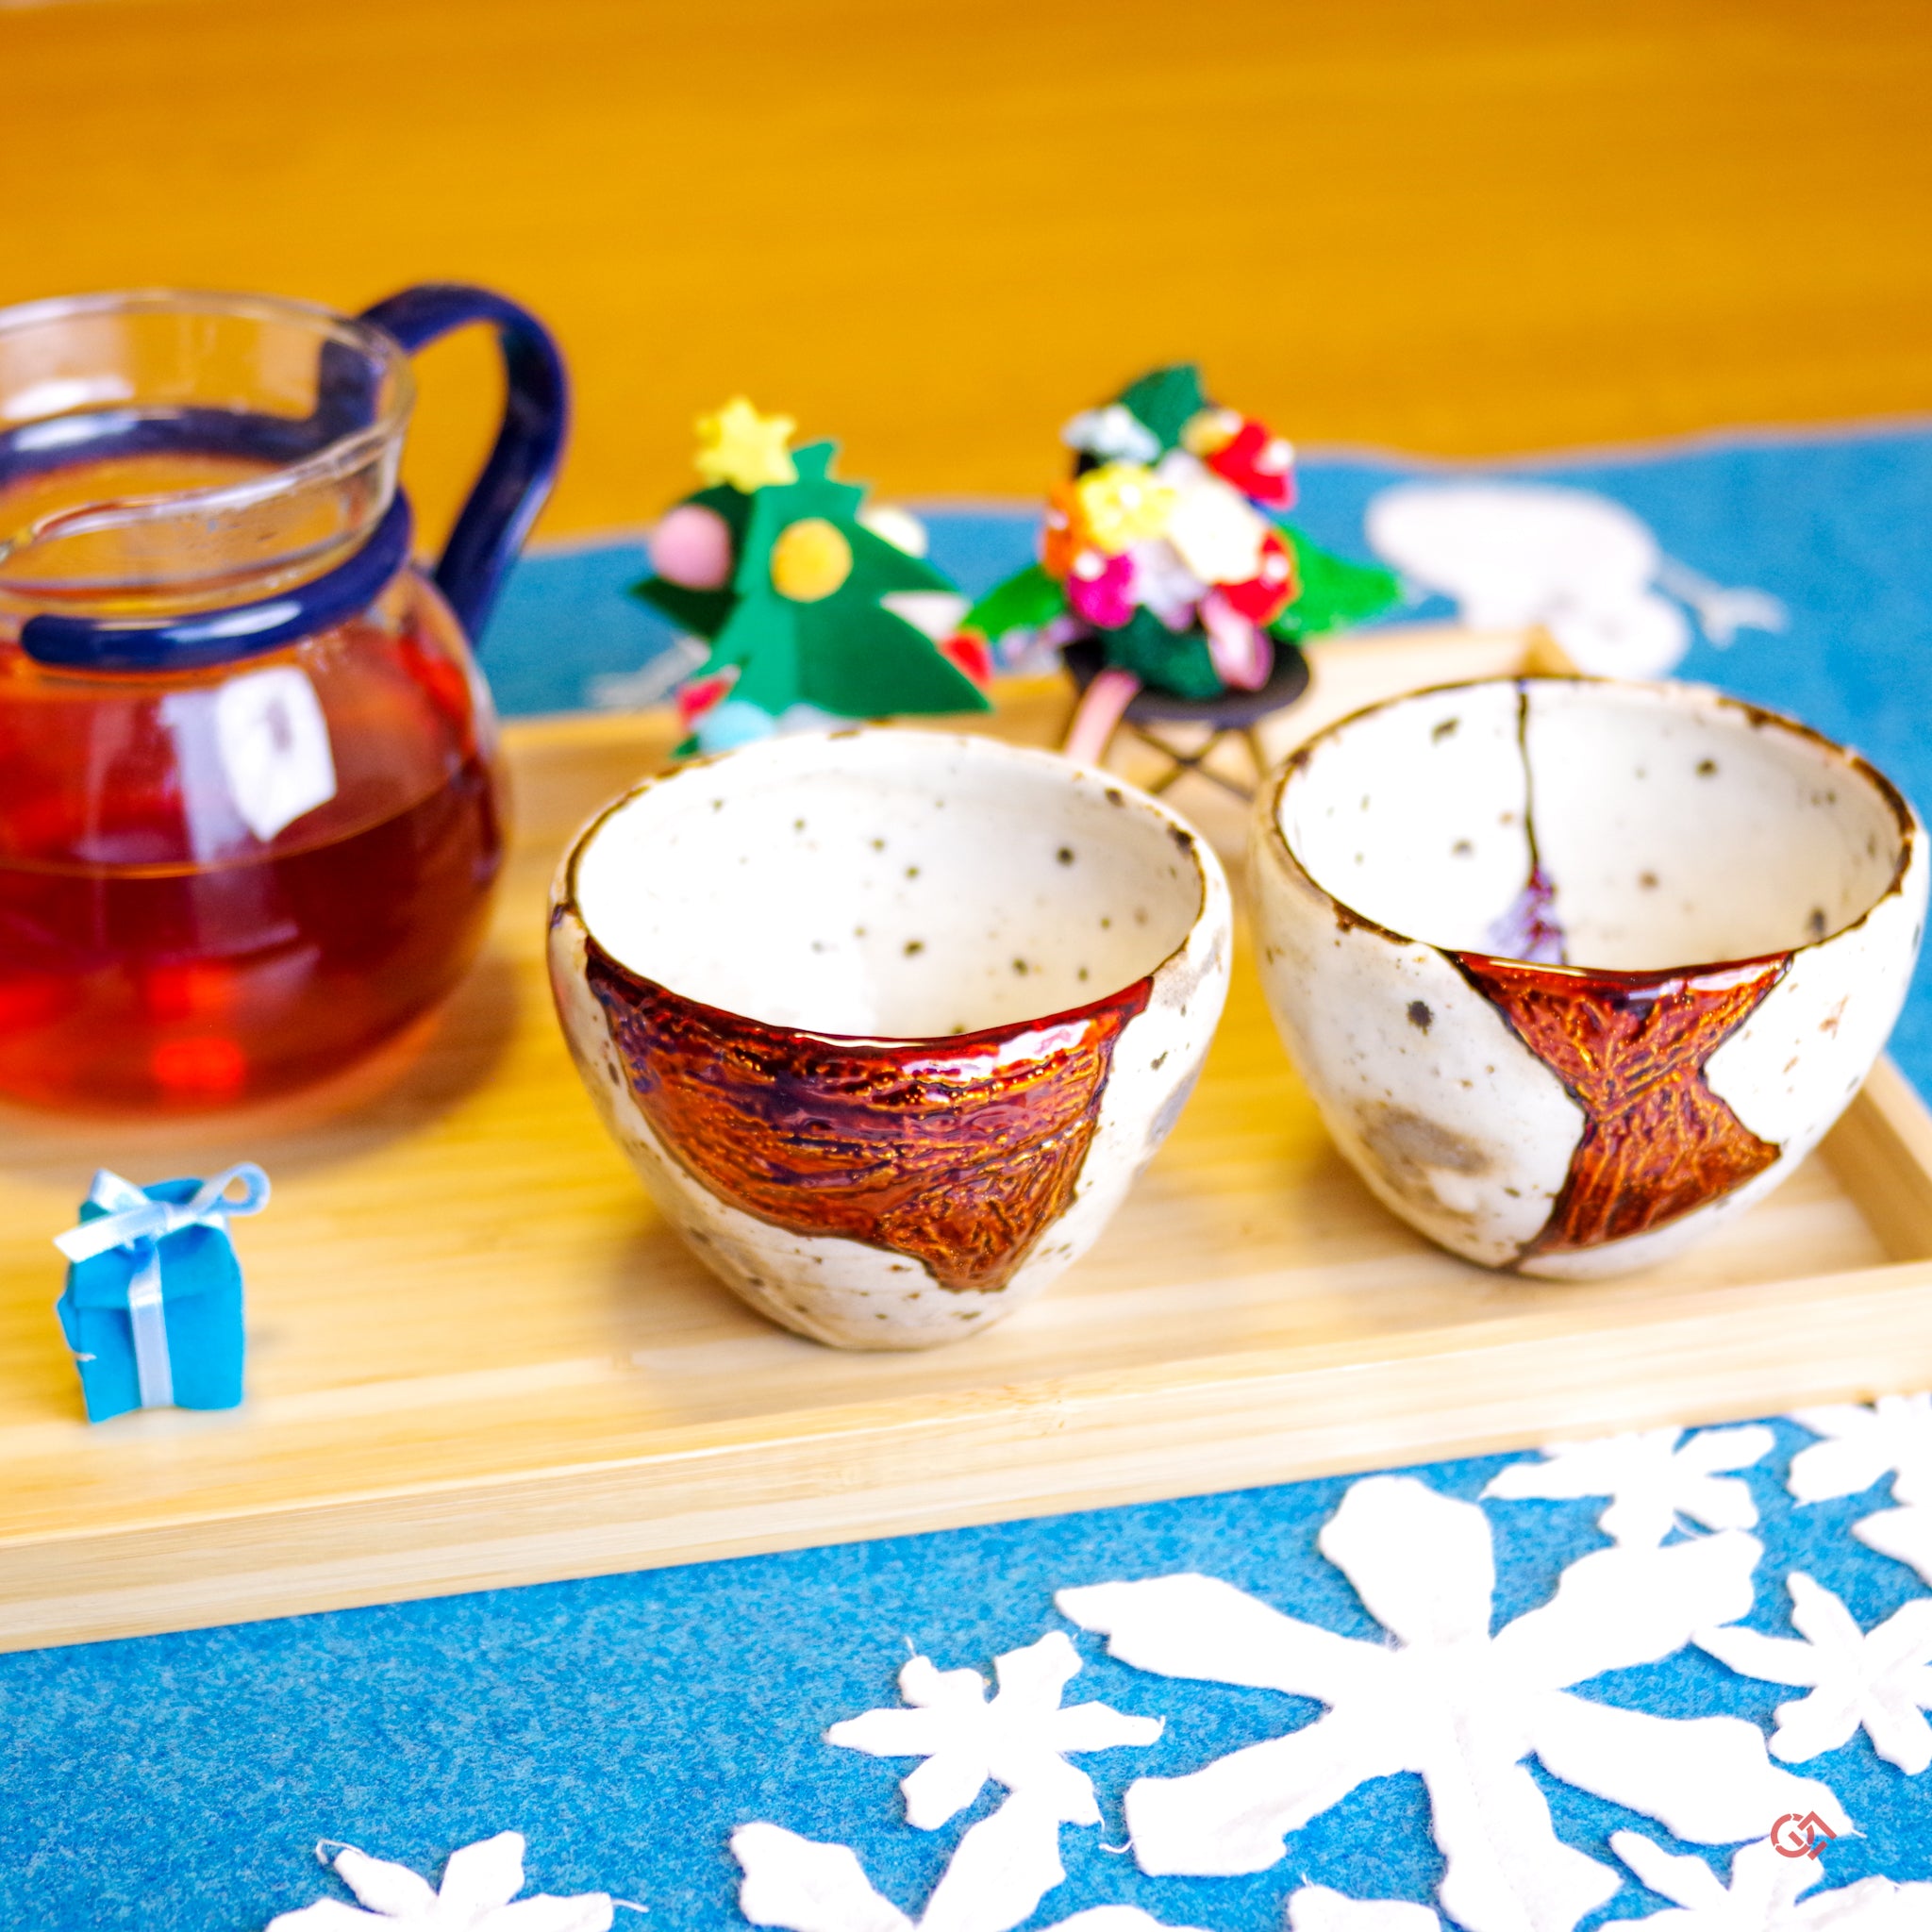 Kintsugi Supplies from Japan  Authentic Traditional Kintsugi Kit